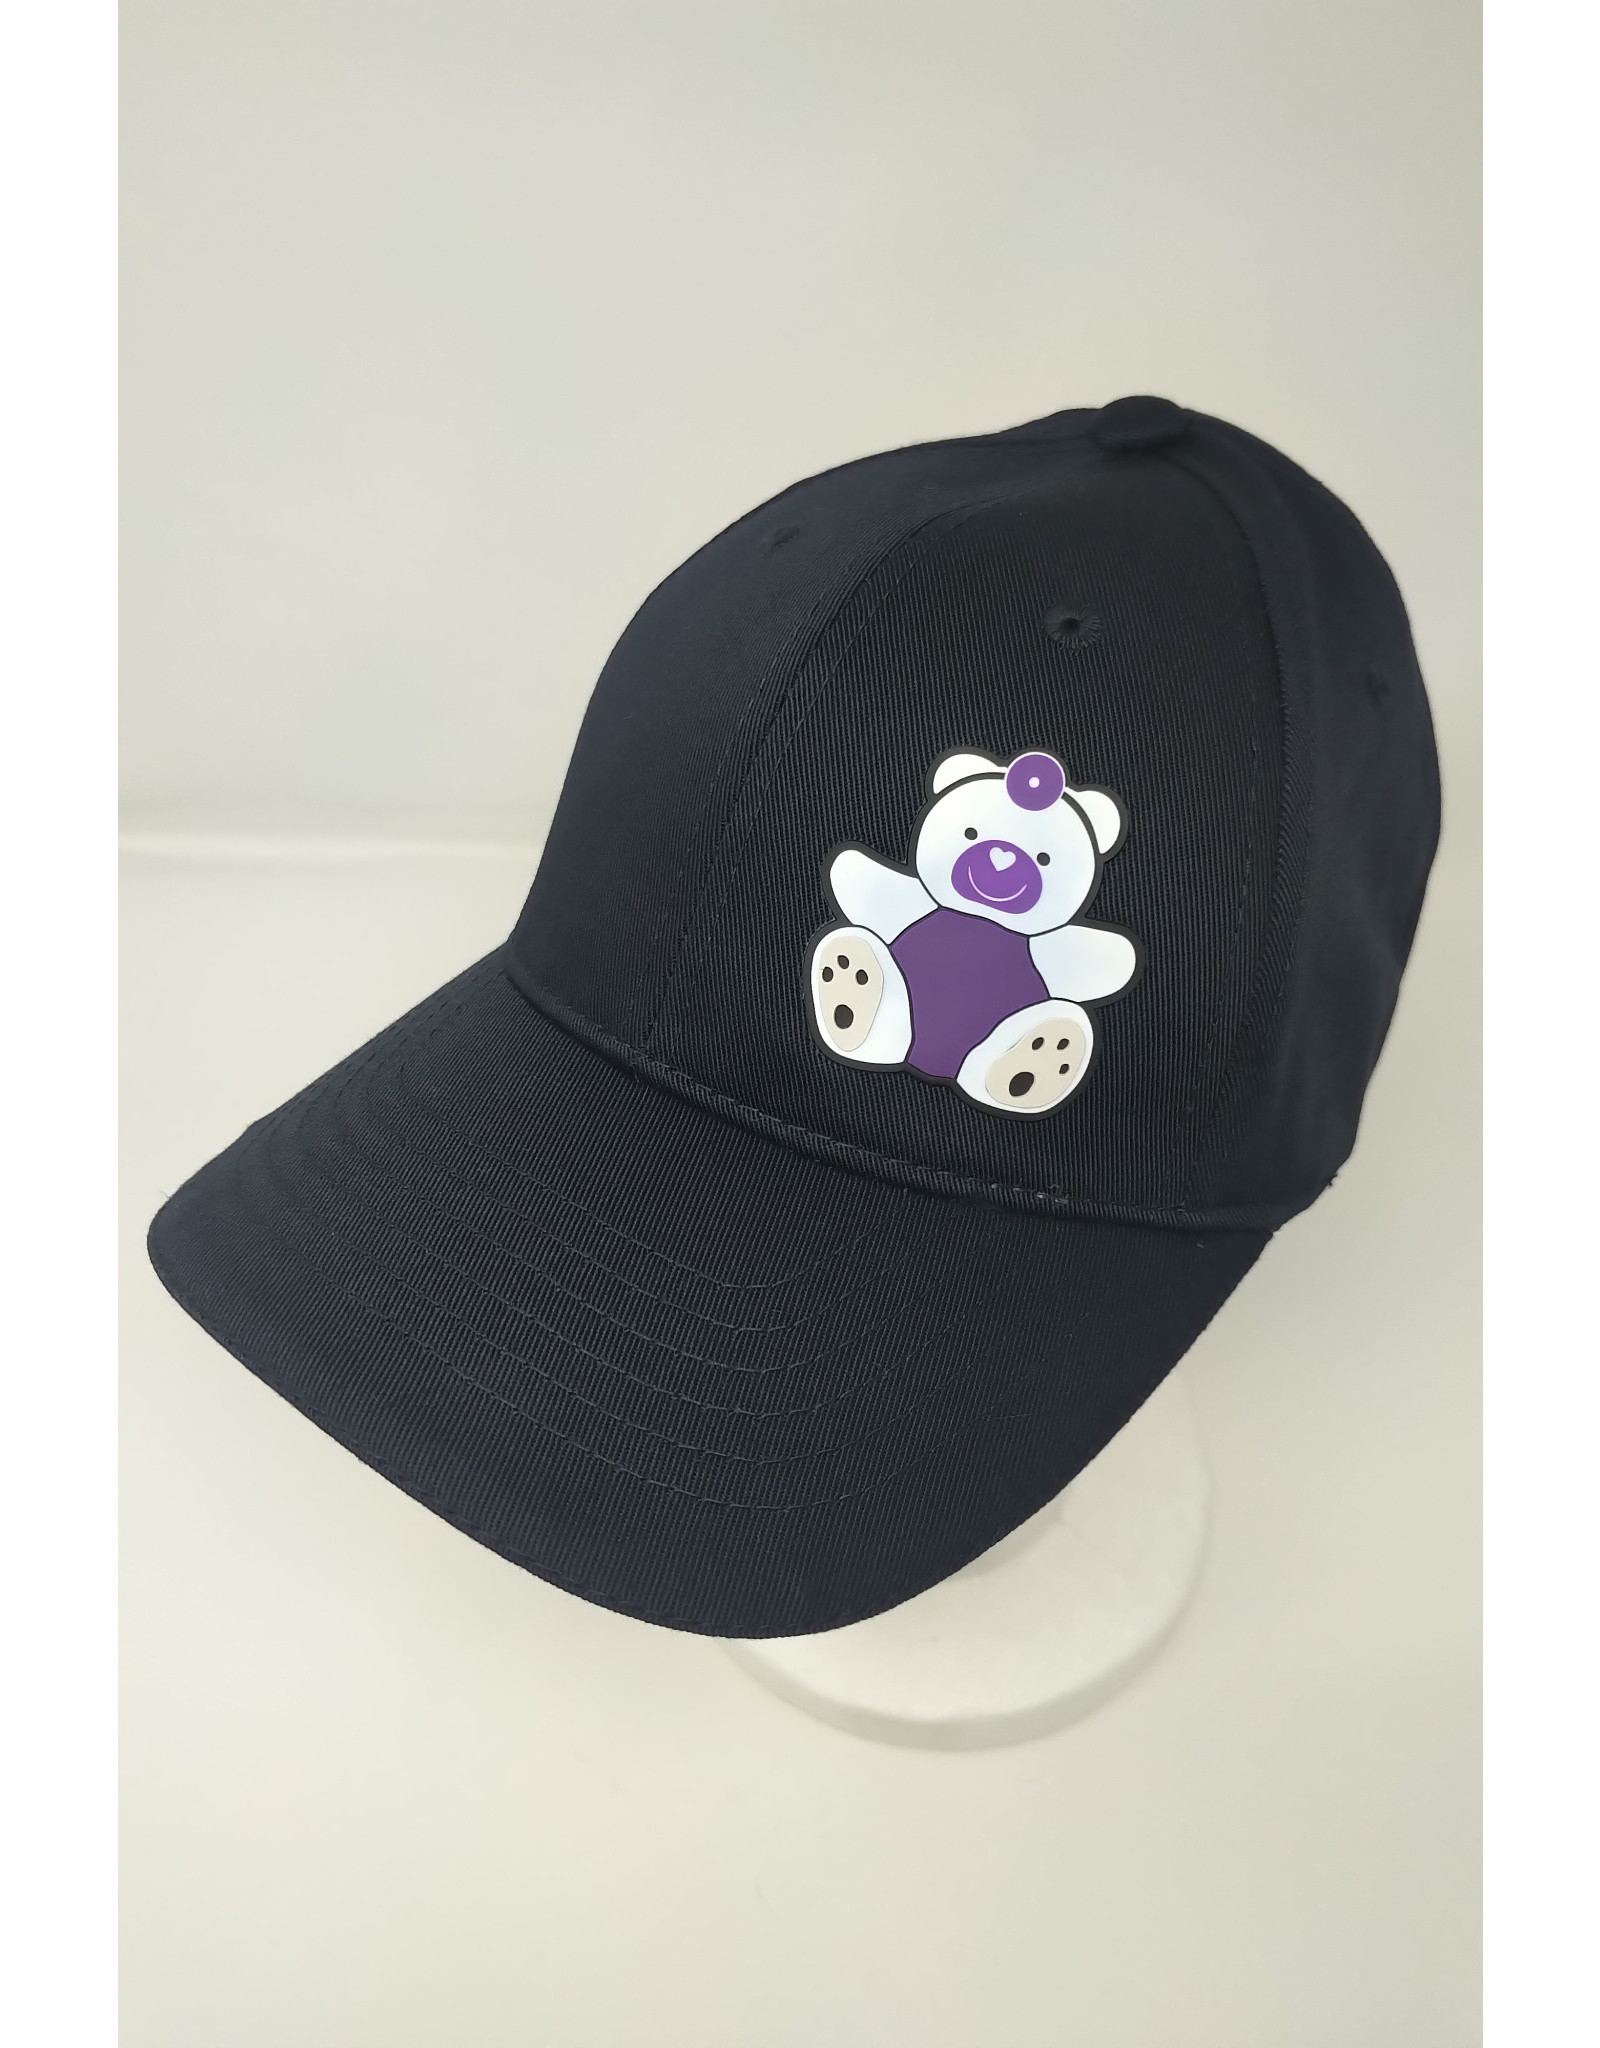 Stollery Adult Hat - purple & white bear